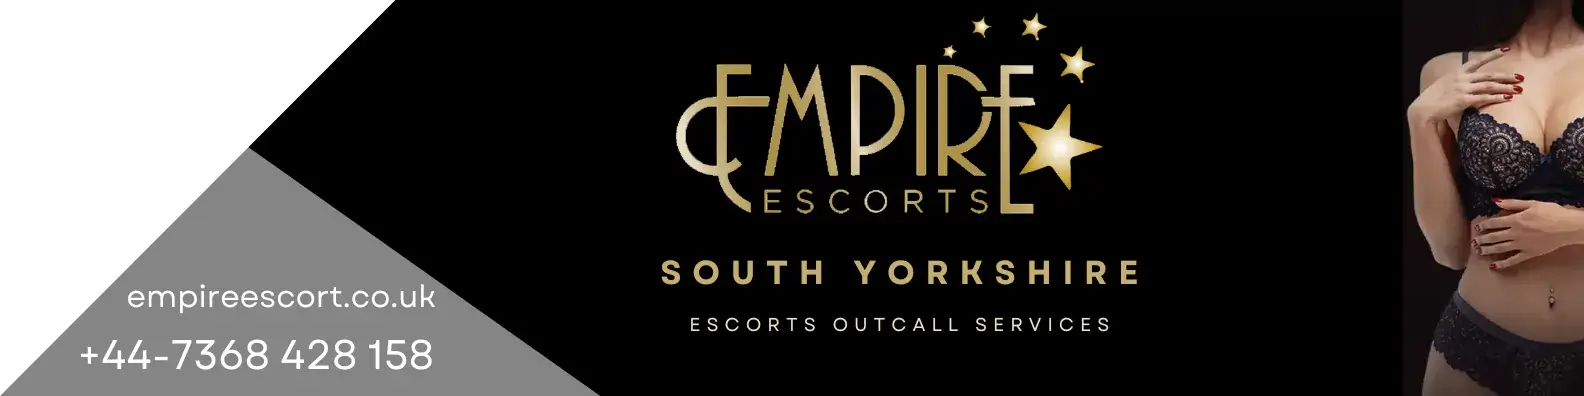 Empire-Escorts-Banner